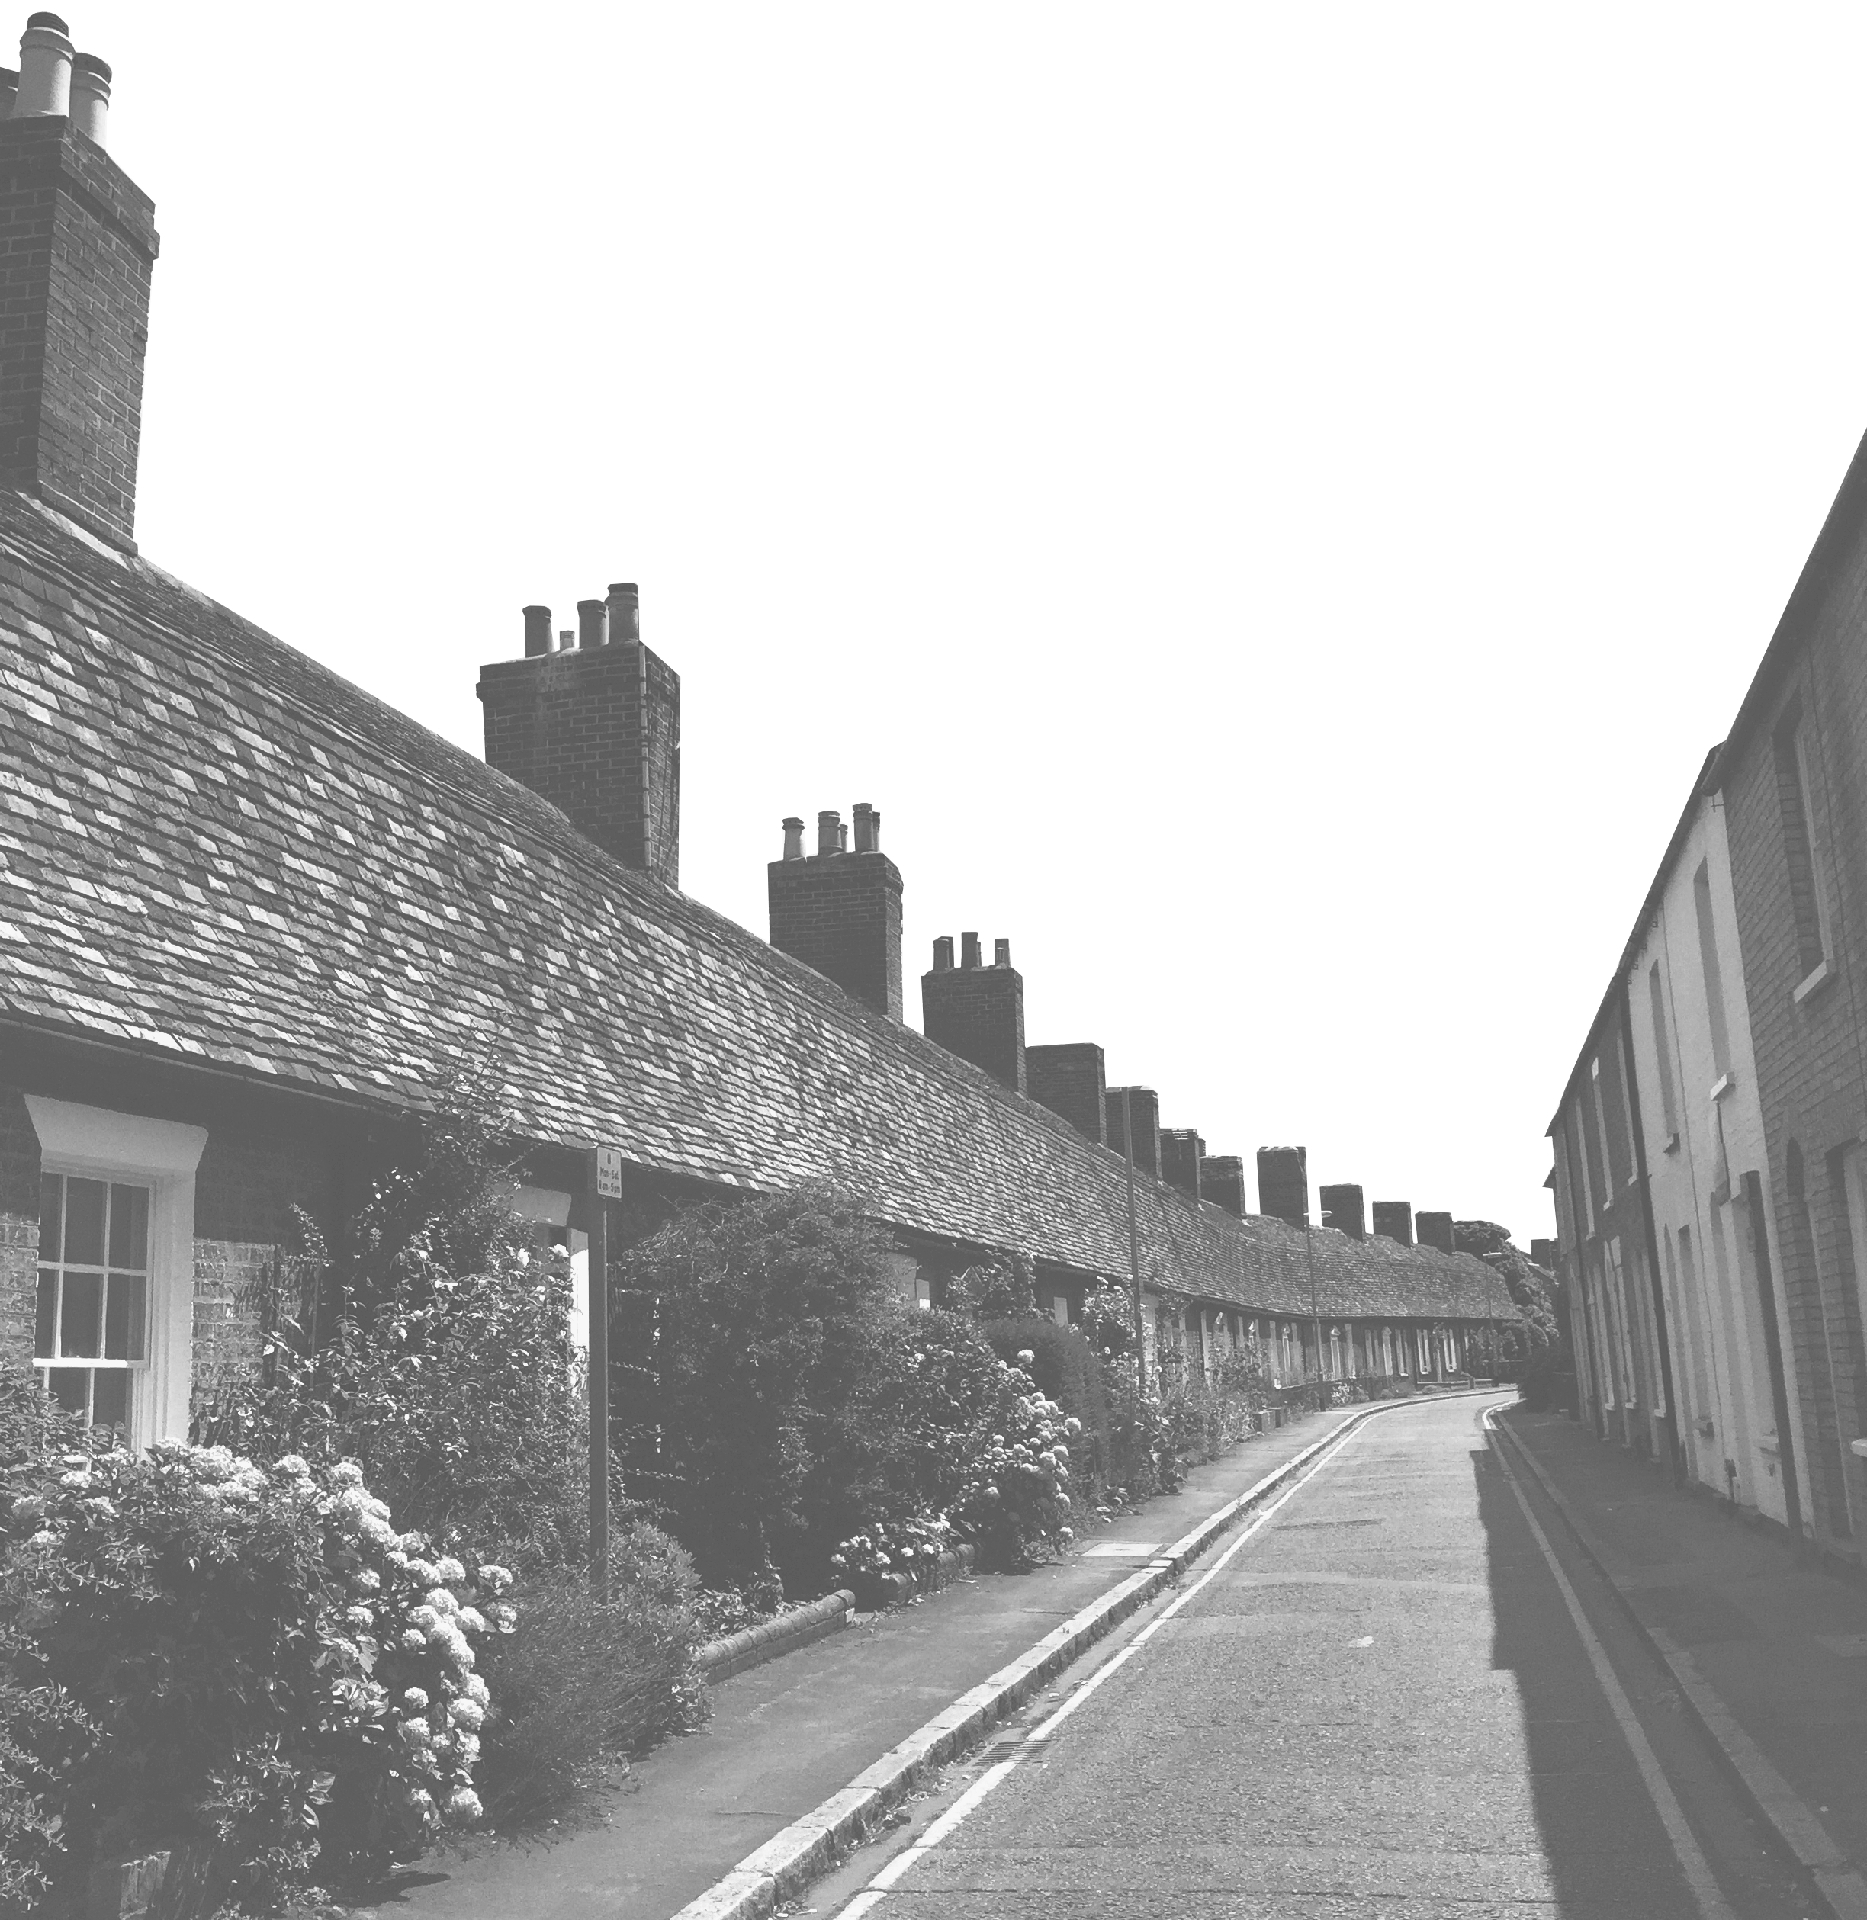 A row of houses